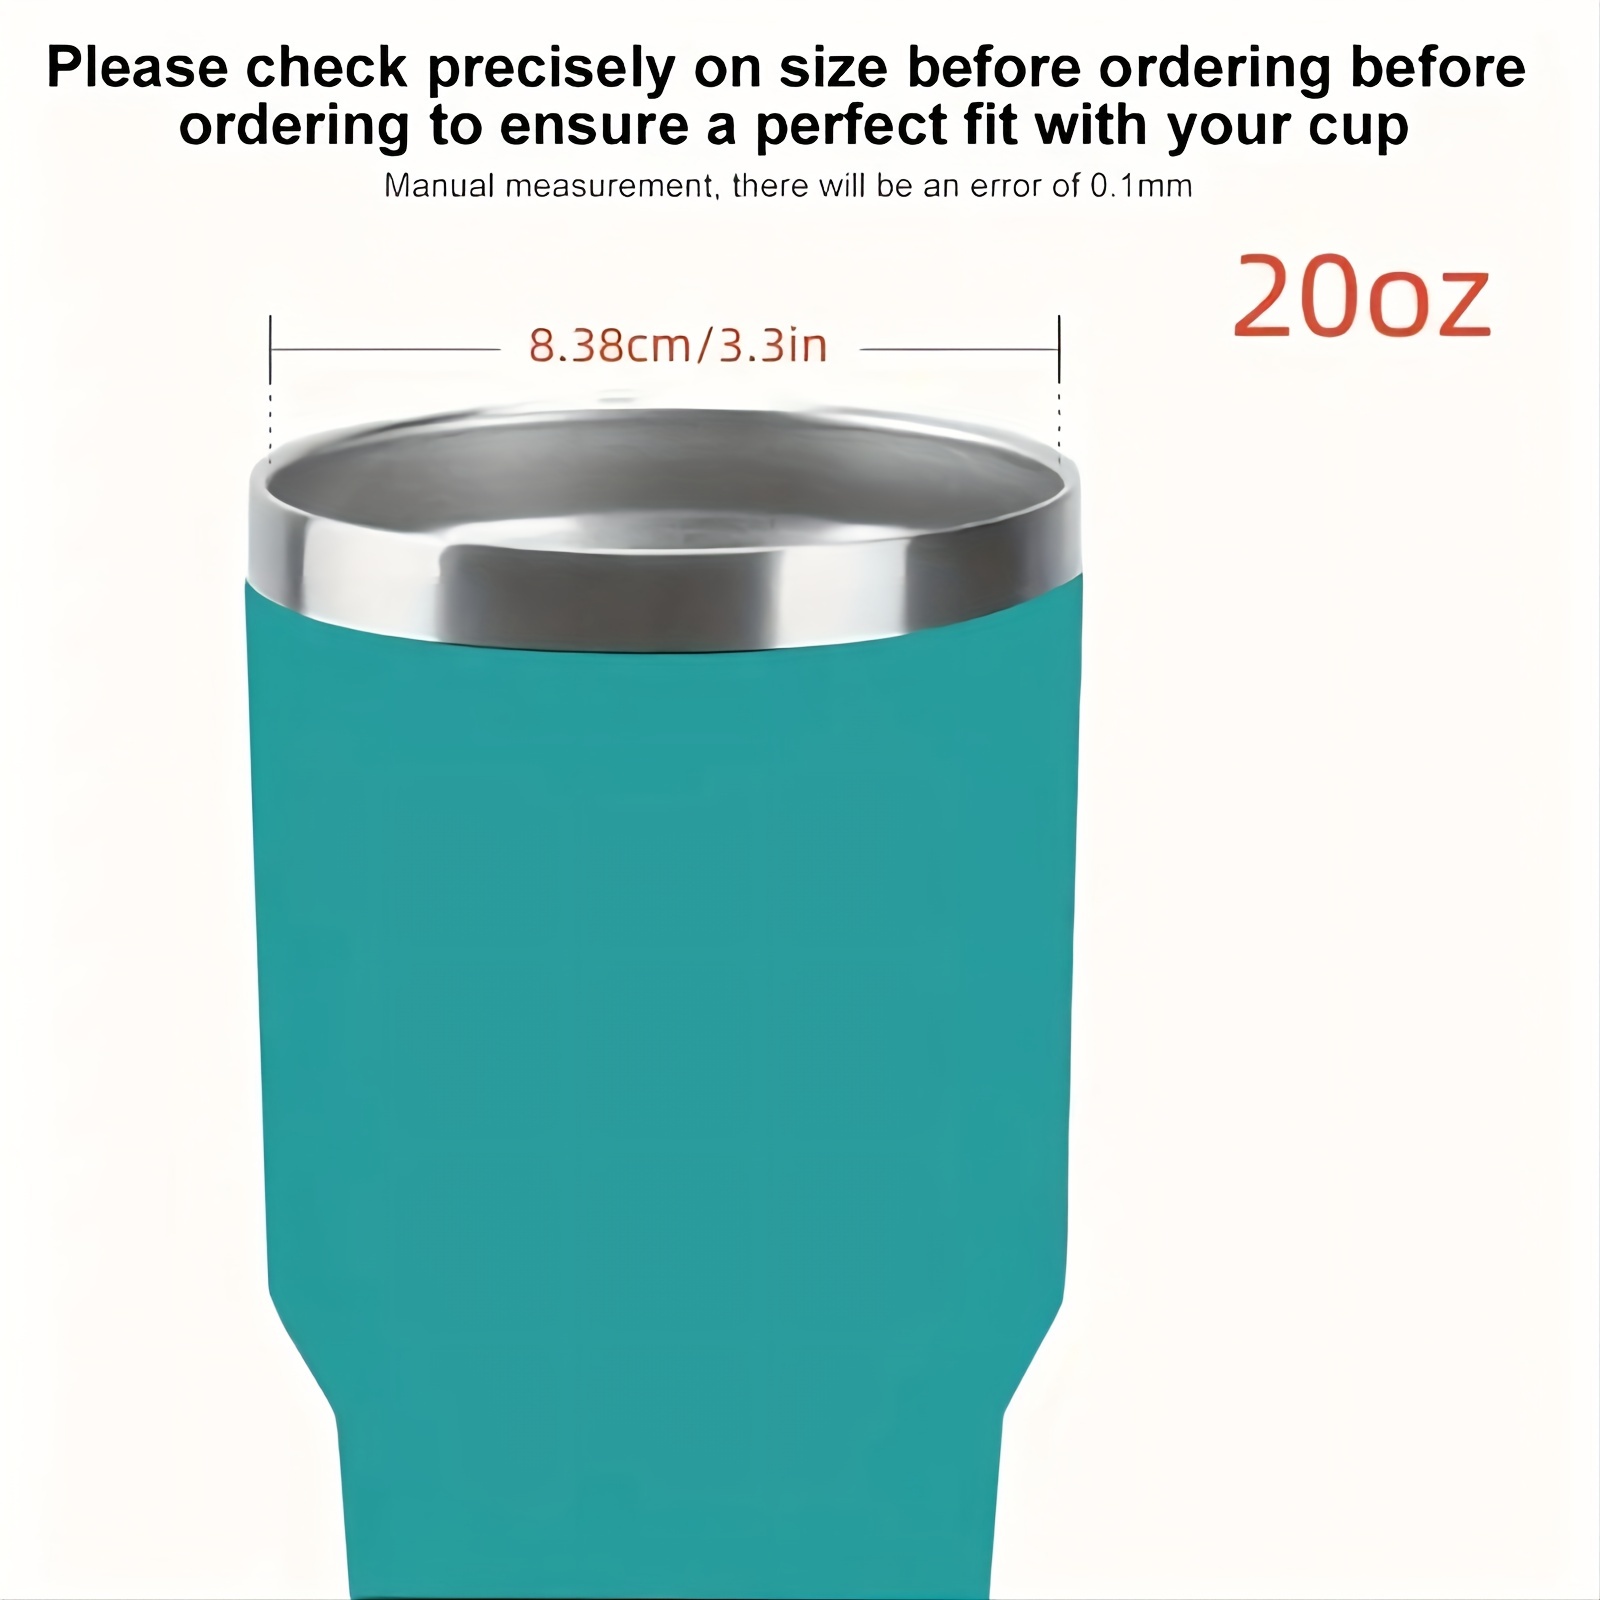 2pcs 30 oz Splash Spill Proof Magnetic Slider Lid for Yeti Rambler Tumbler Cup, Size: 2Packs 30 oz